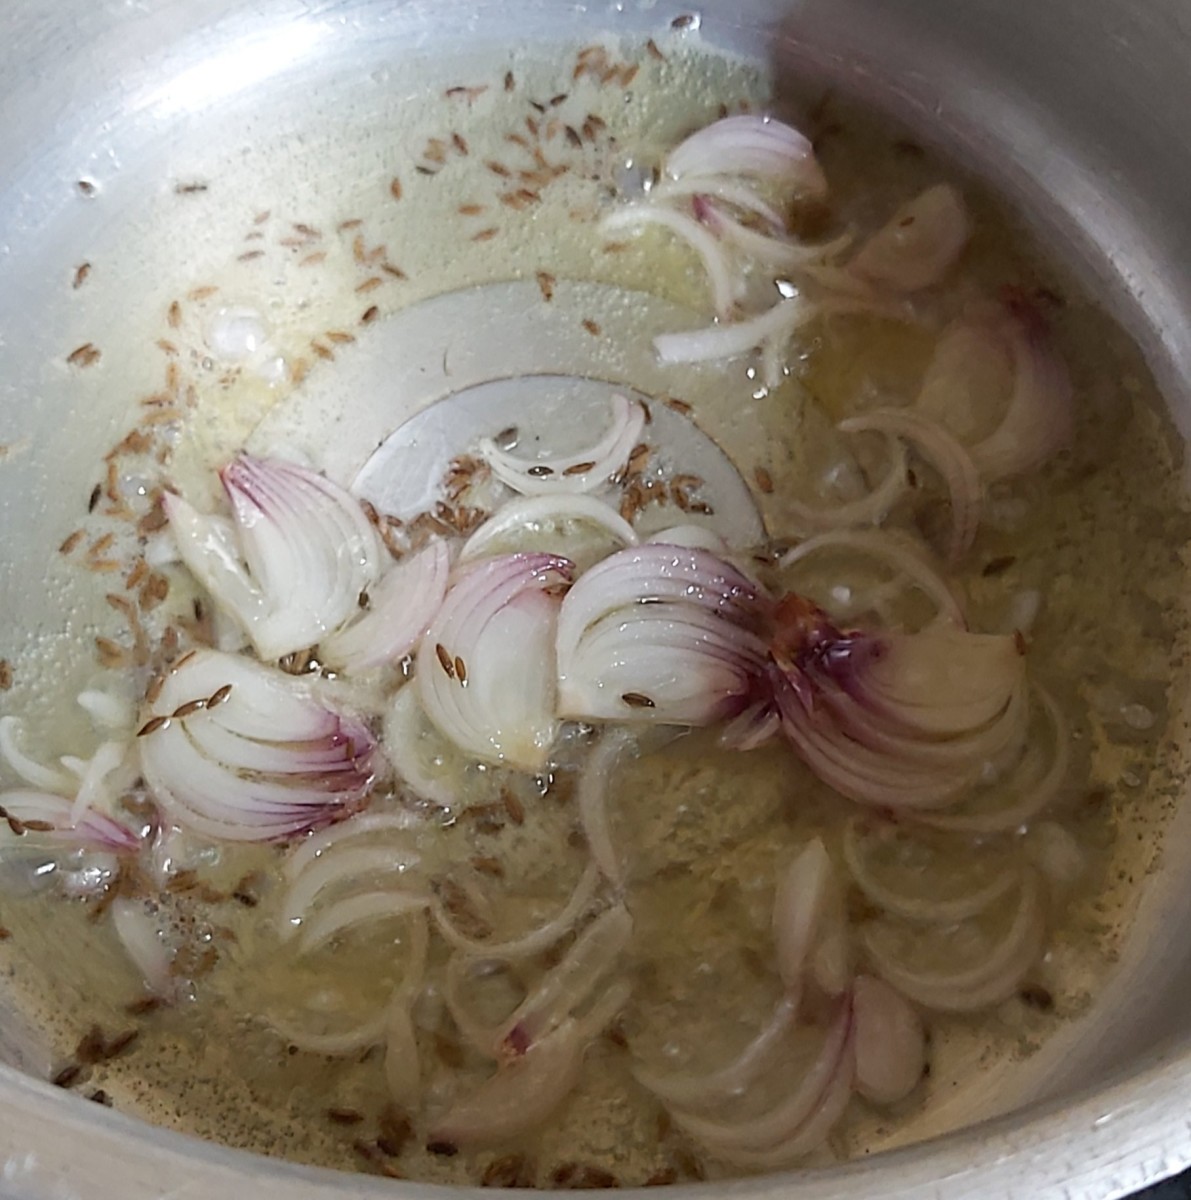 Add chopped onions, fry till translucent.